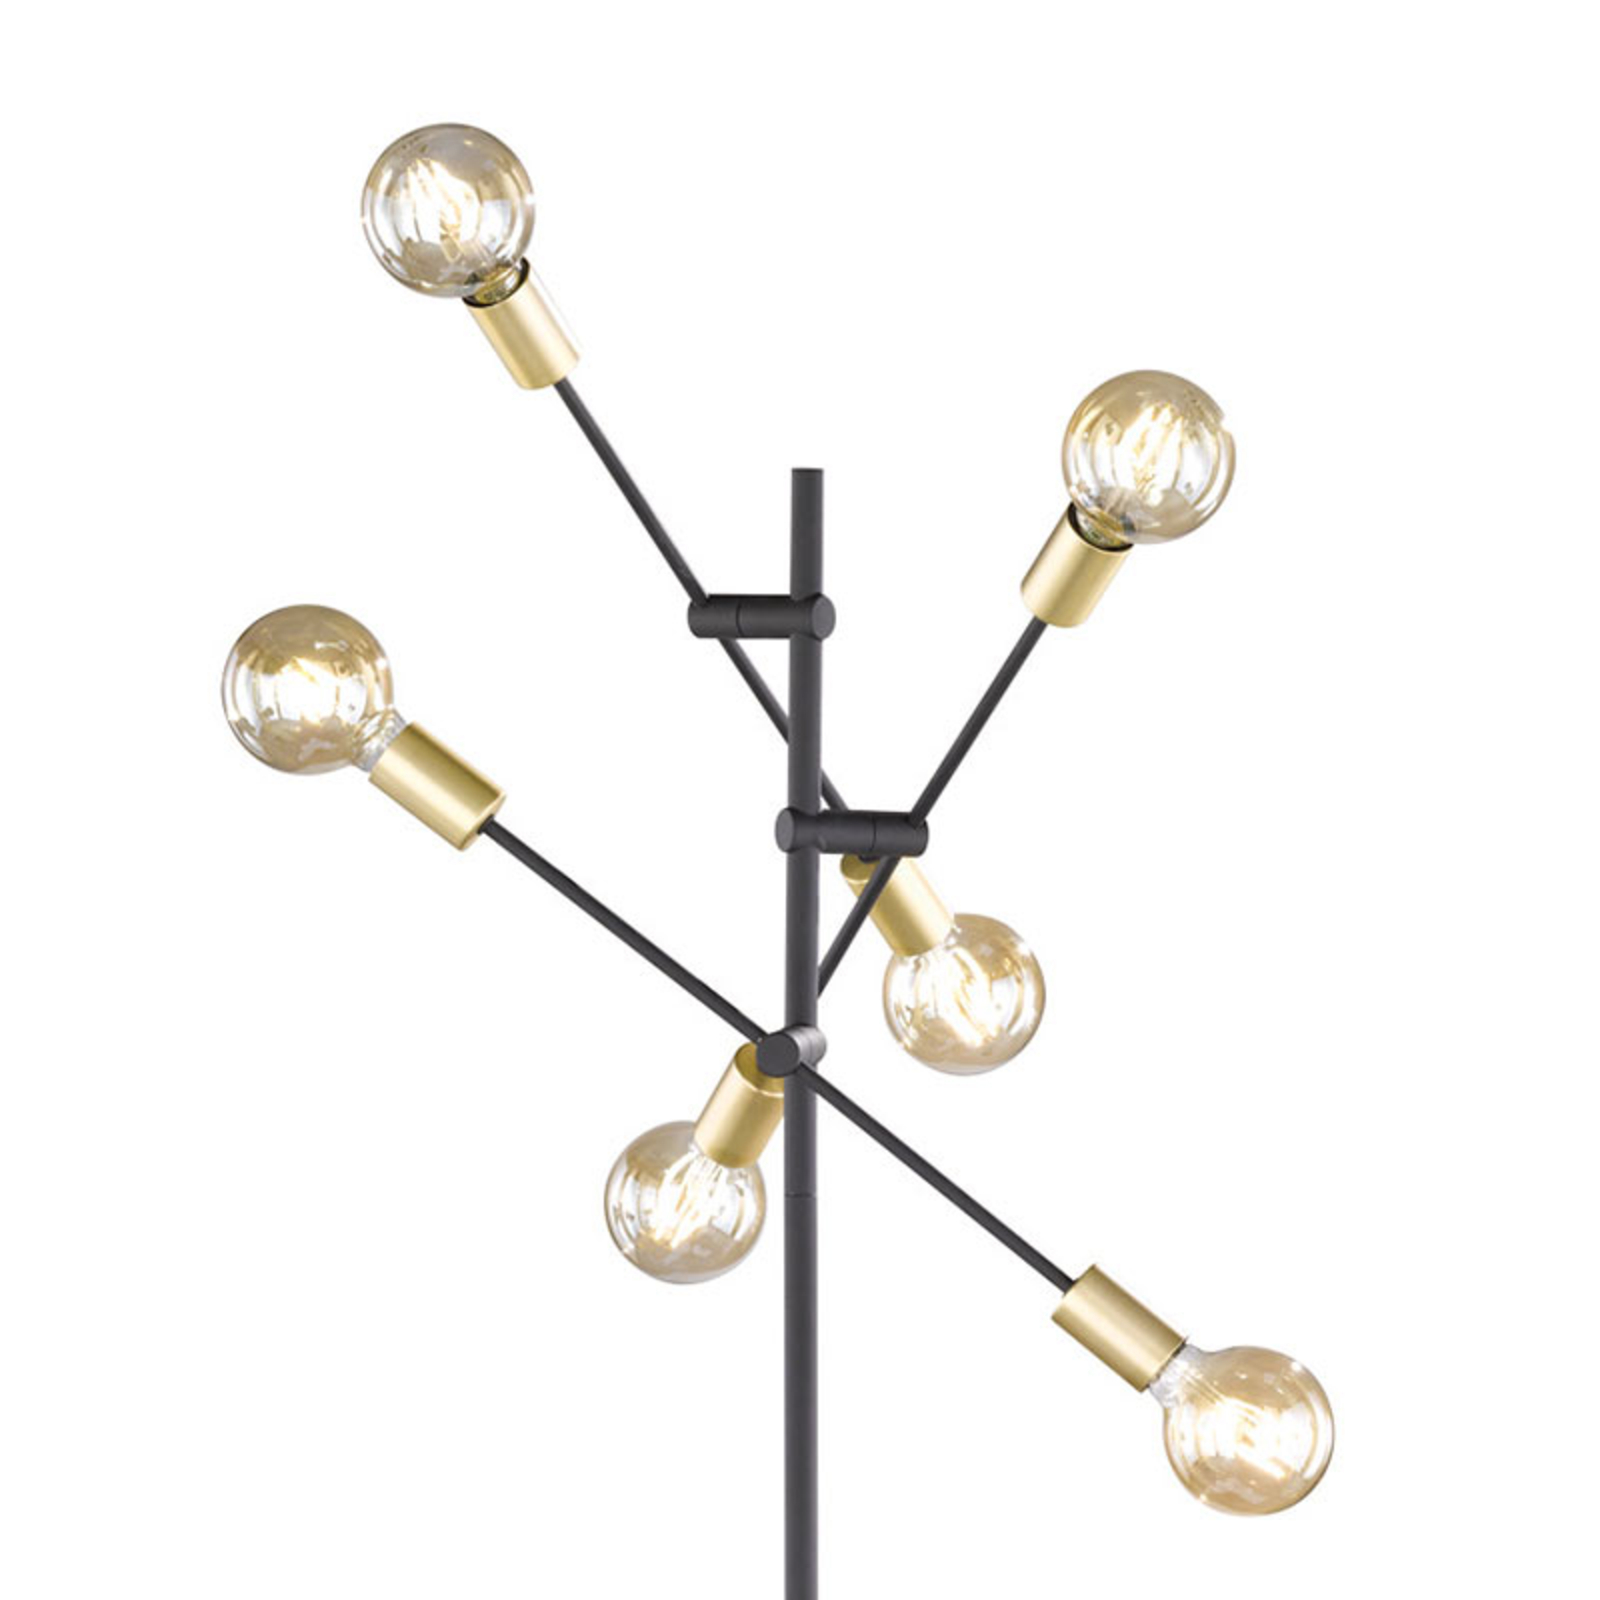 Stehlampe Cross in trendigem Schwarz-Gold-Design